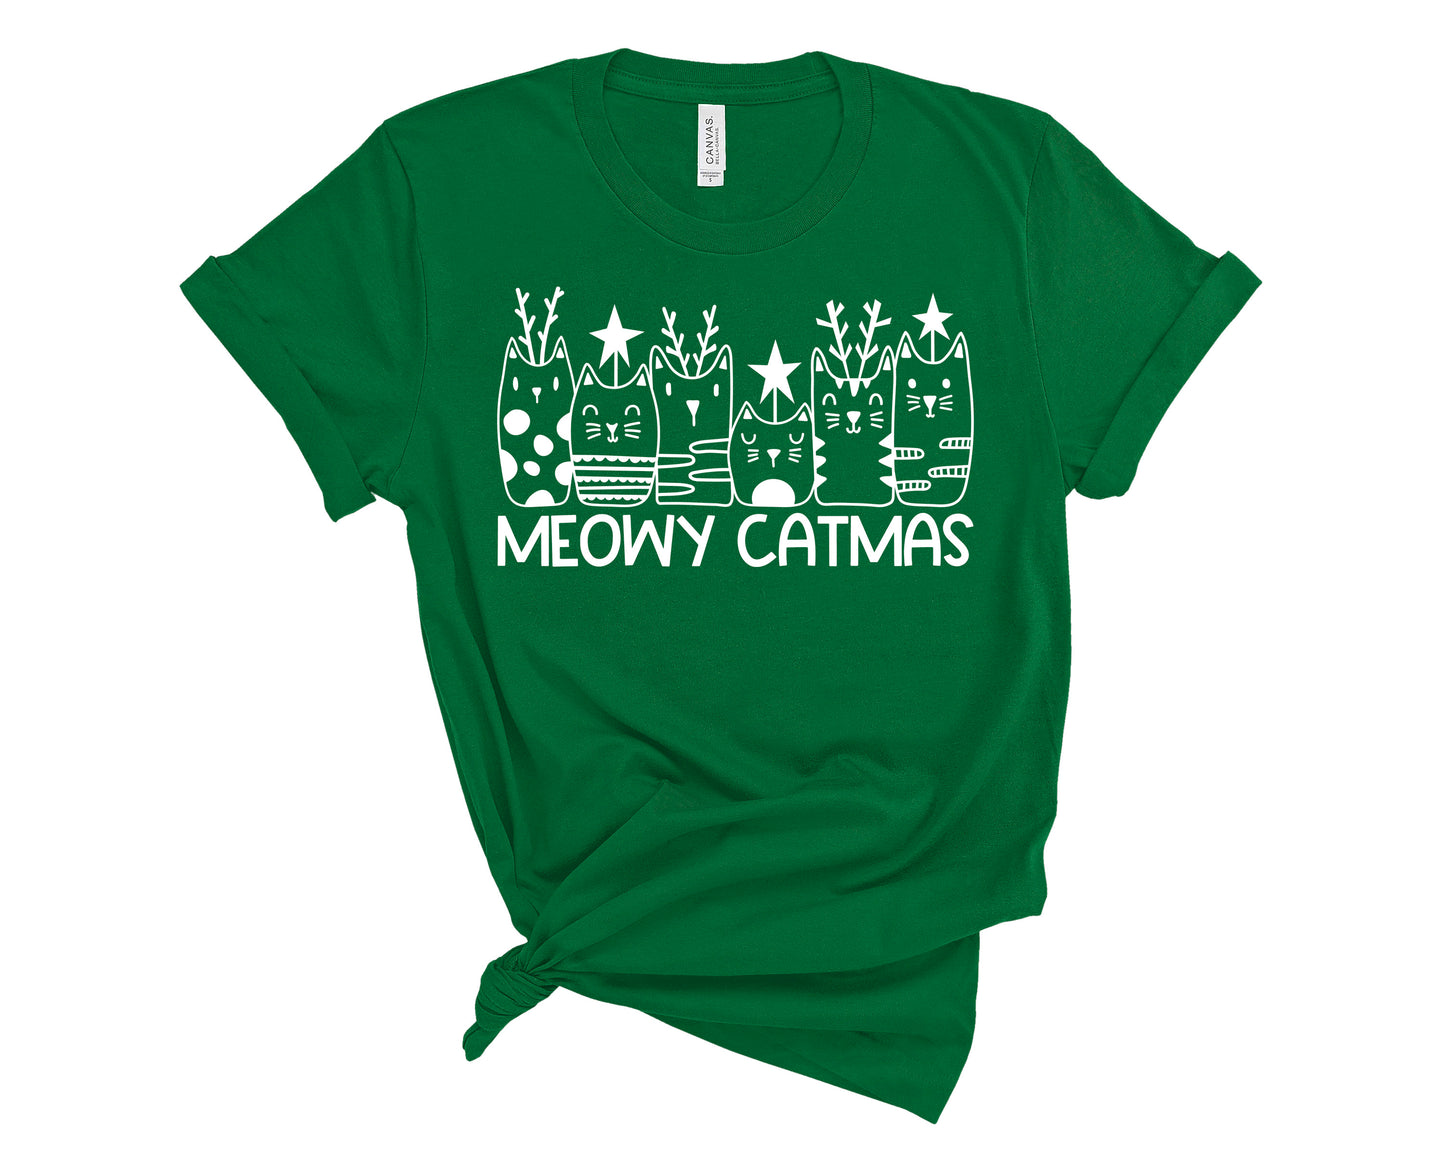 merry catmas shirt